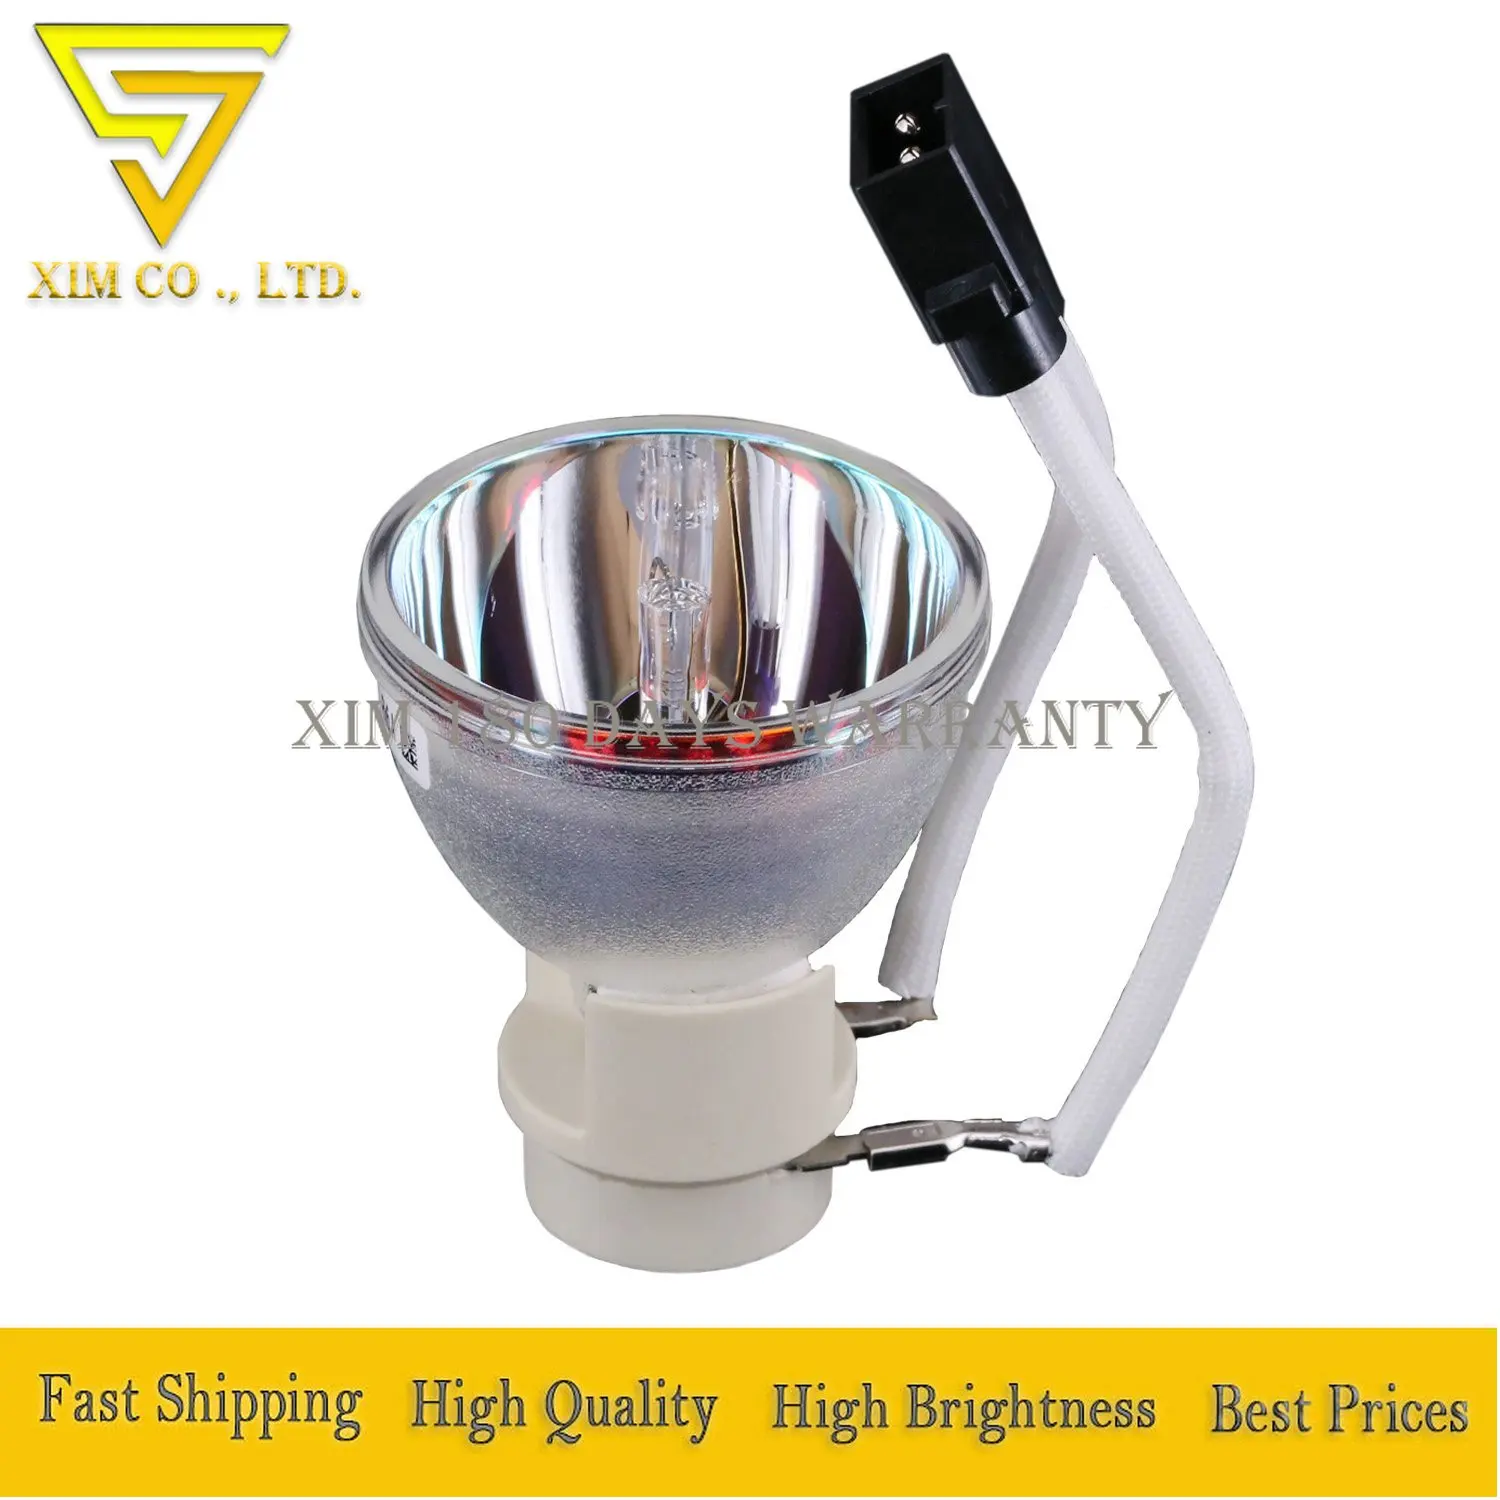 Лампочка для проектора, совместимая с лампочками E20.8, Лампа для проектора, C0V30389301 для LG лампочка для проектора lmp e191 стандартная лампочка для sony стандартная лампочка 215 140 вт совместимая с производителем